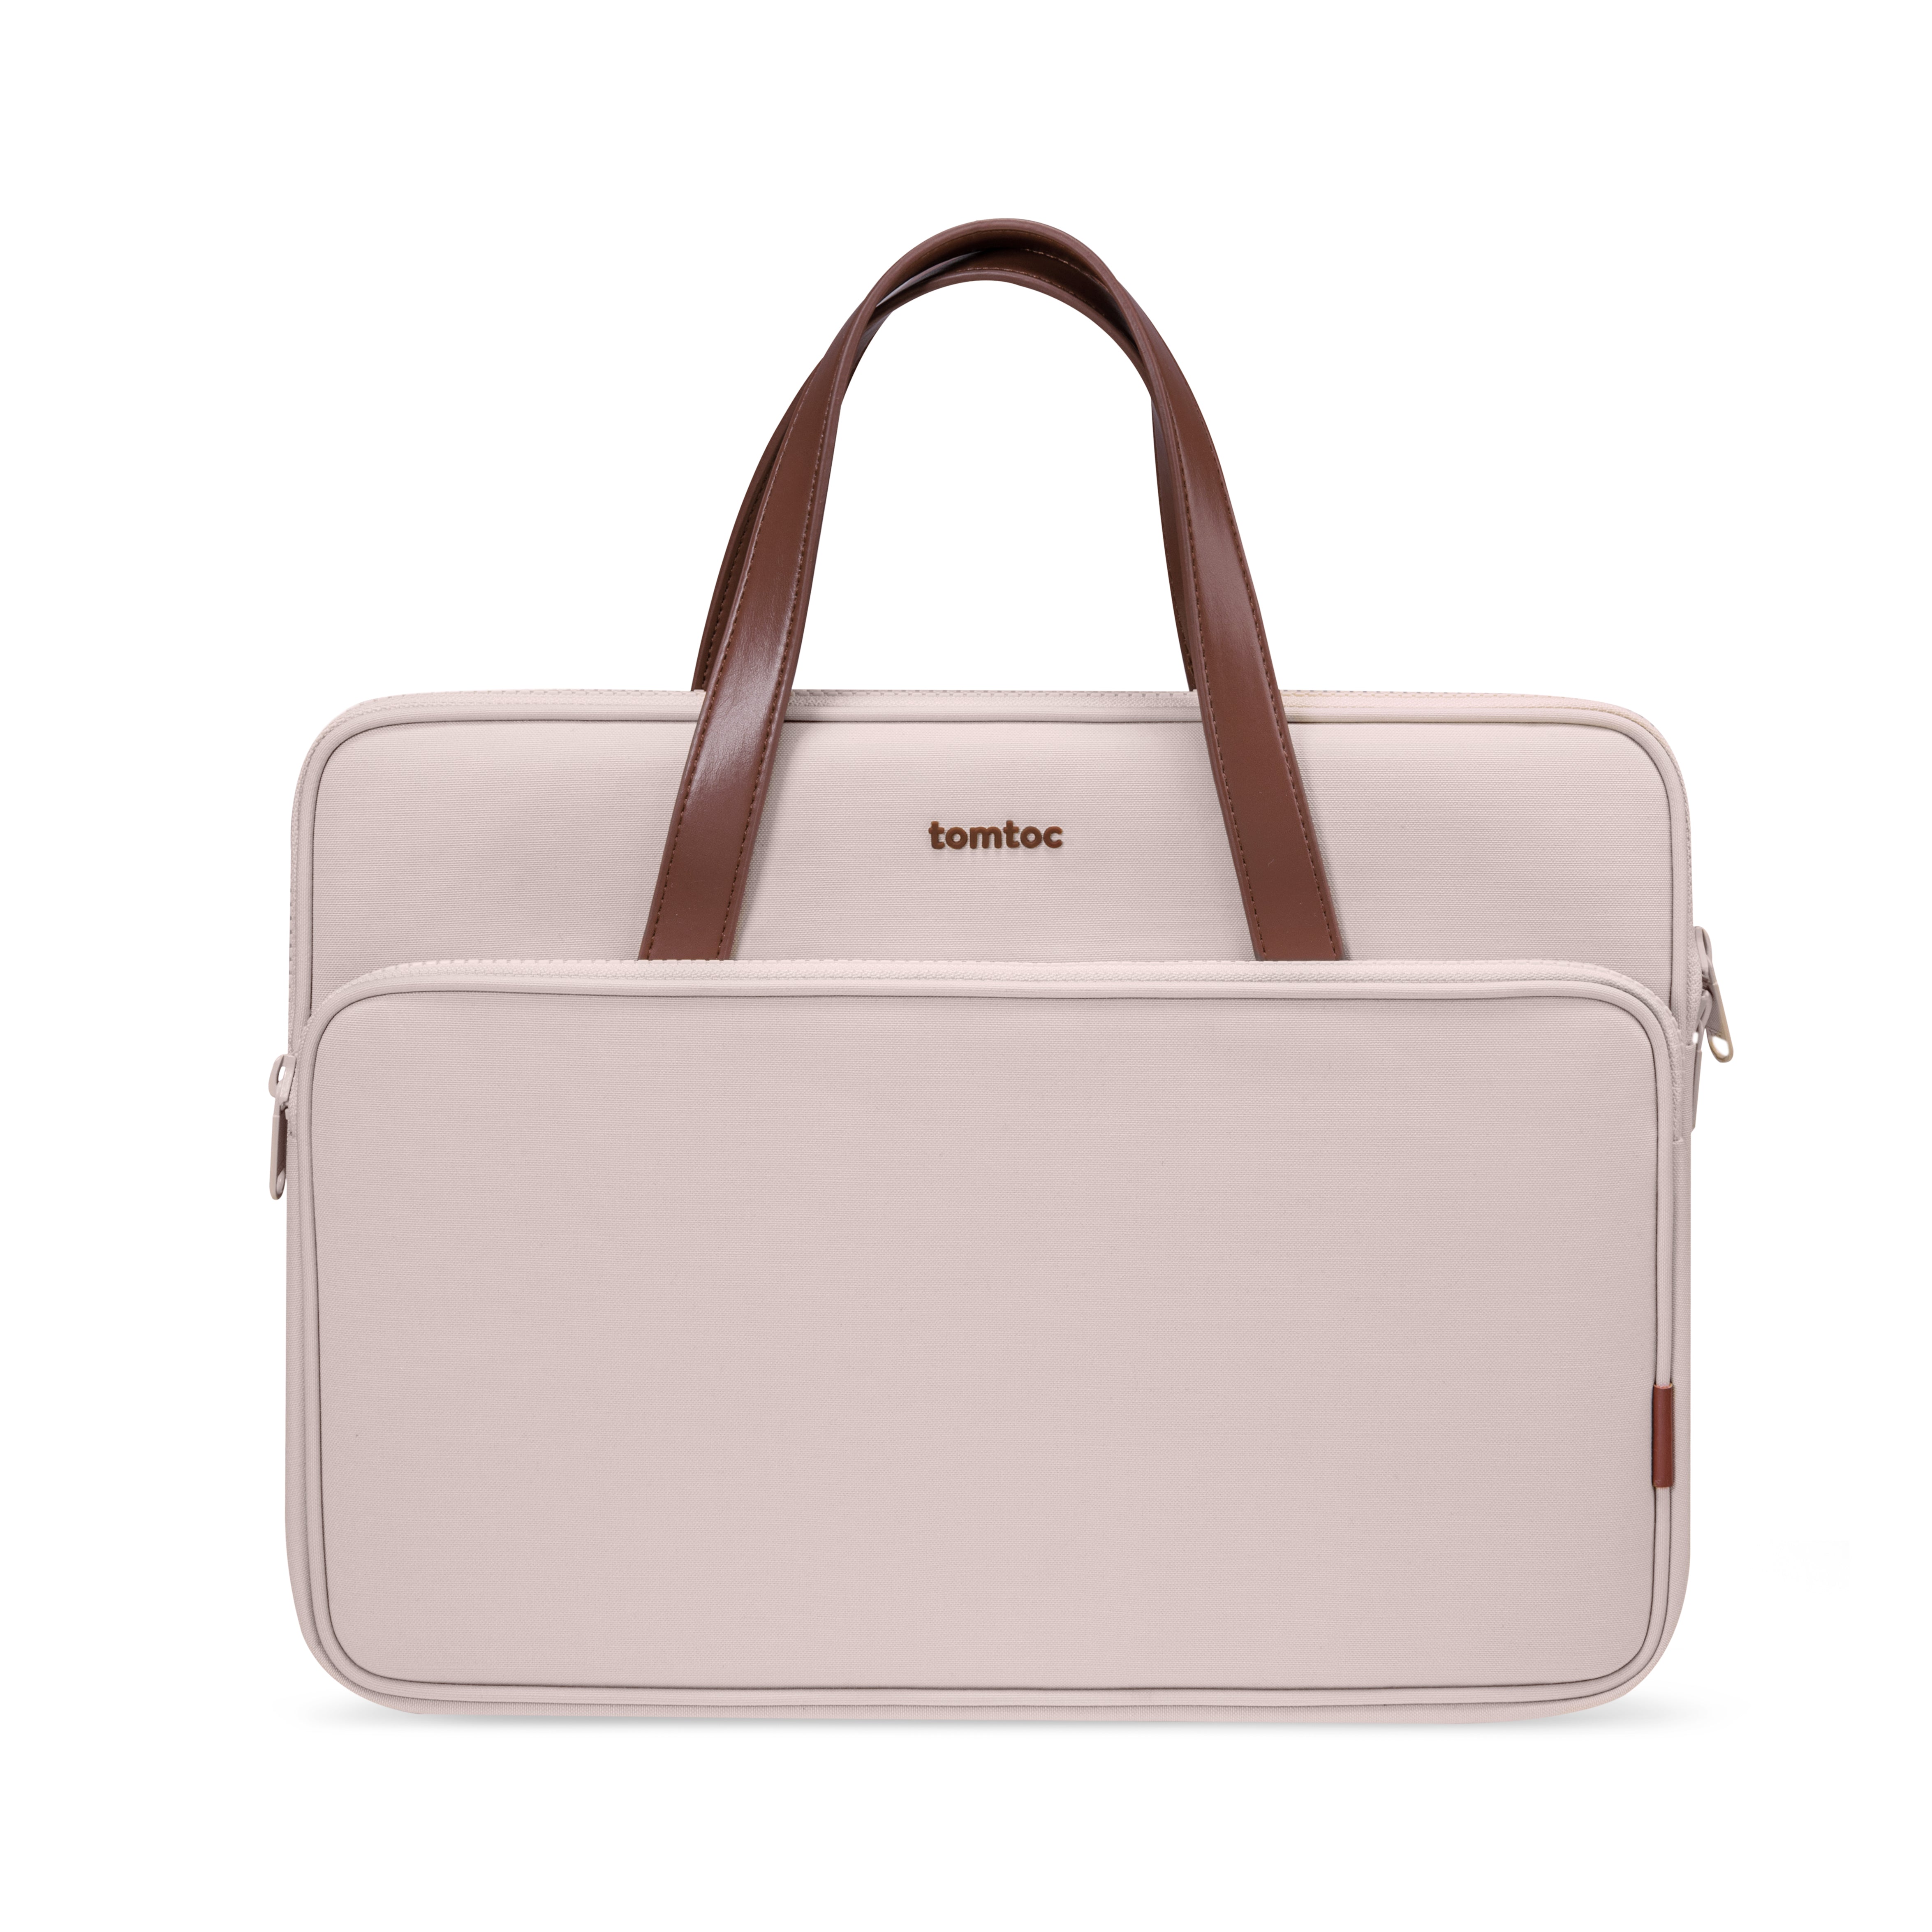 tomtoc Versatile-A11 Laptop Handbag - 14inch